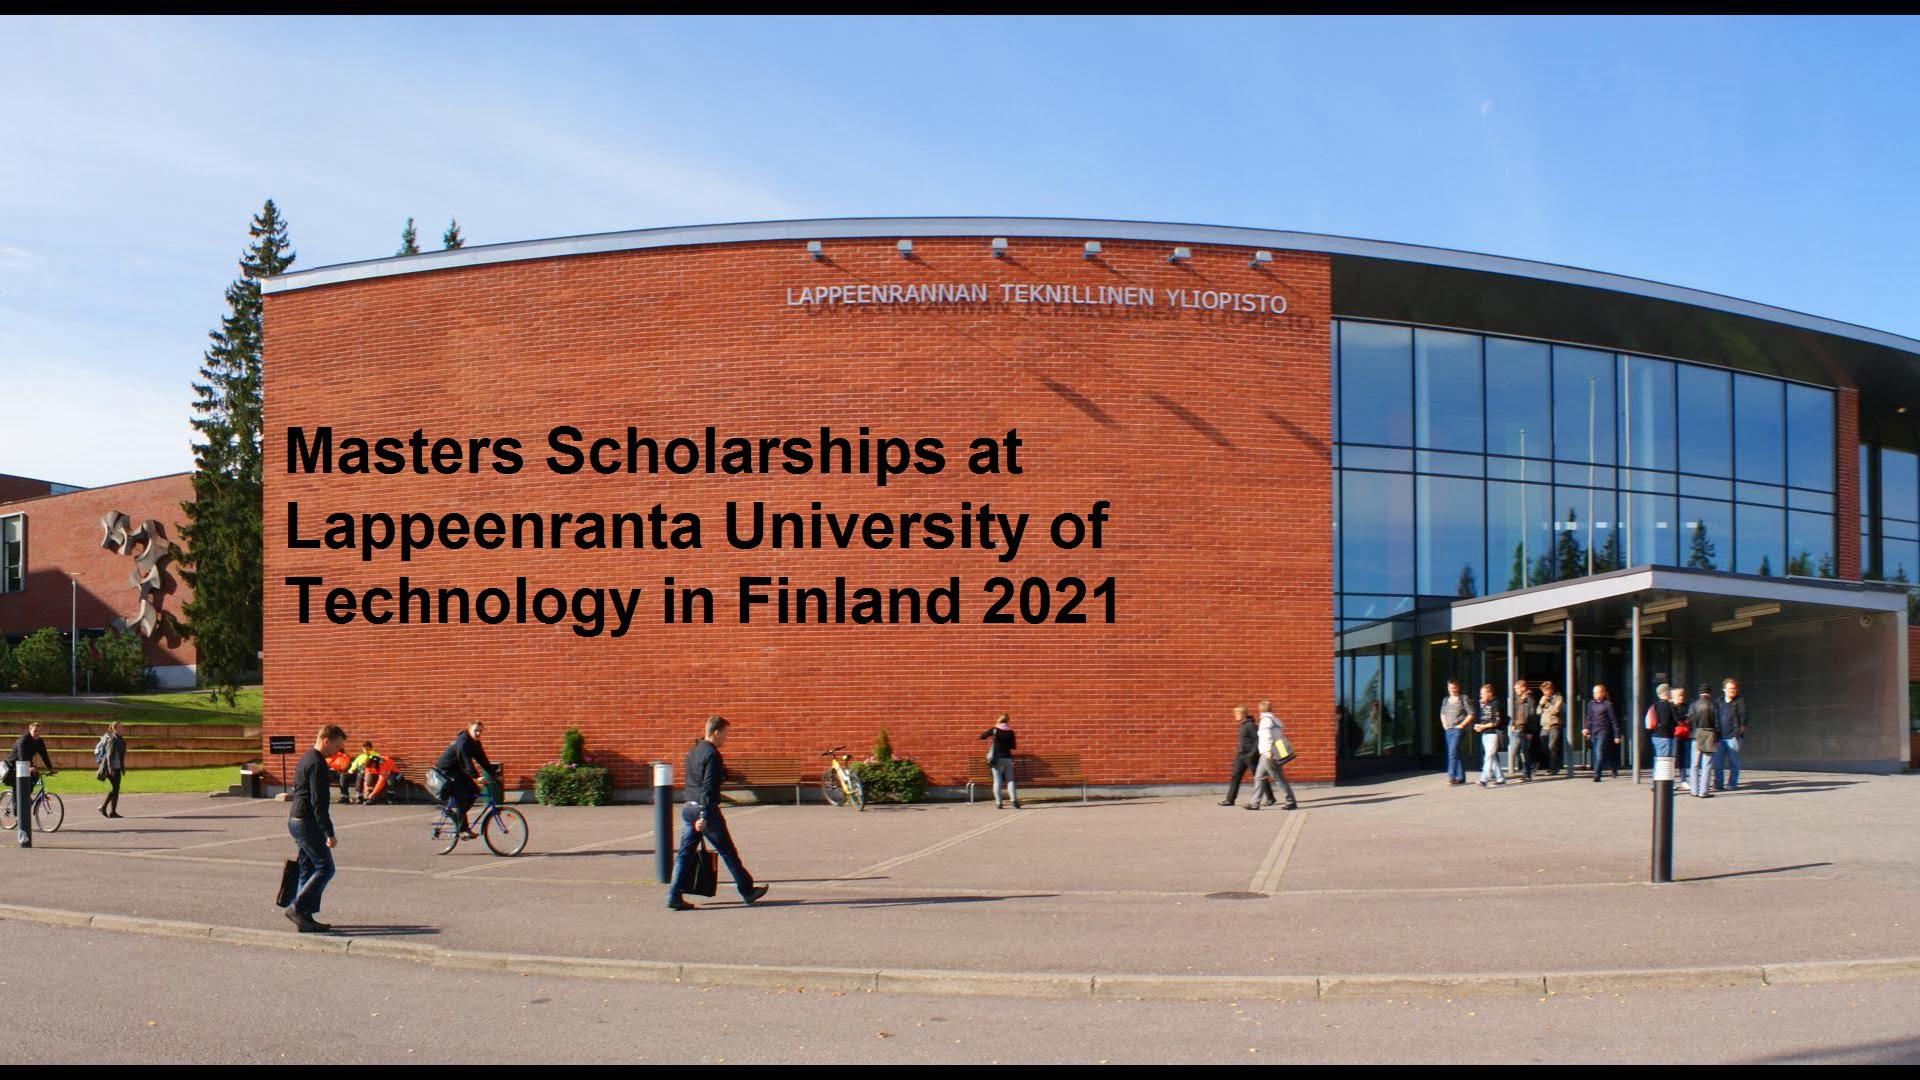 Masters Scholarships at Lappeenranta University of Technology in Finland 2021